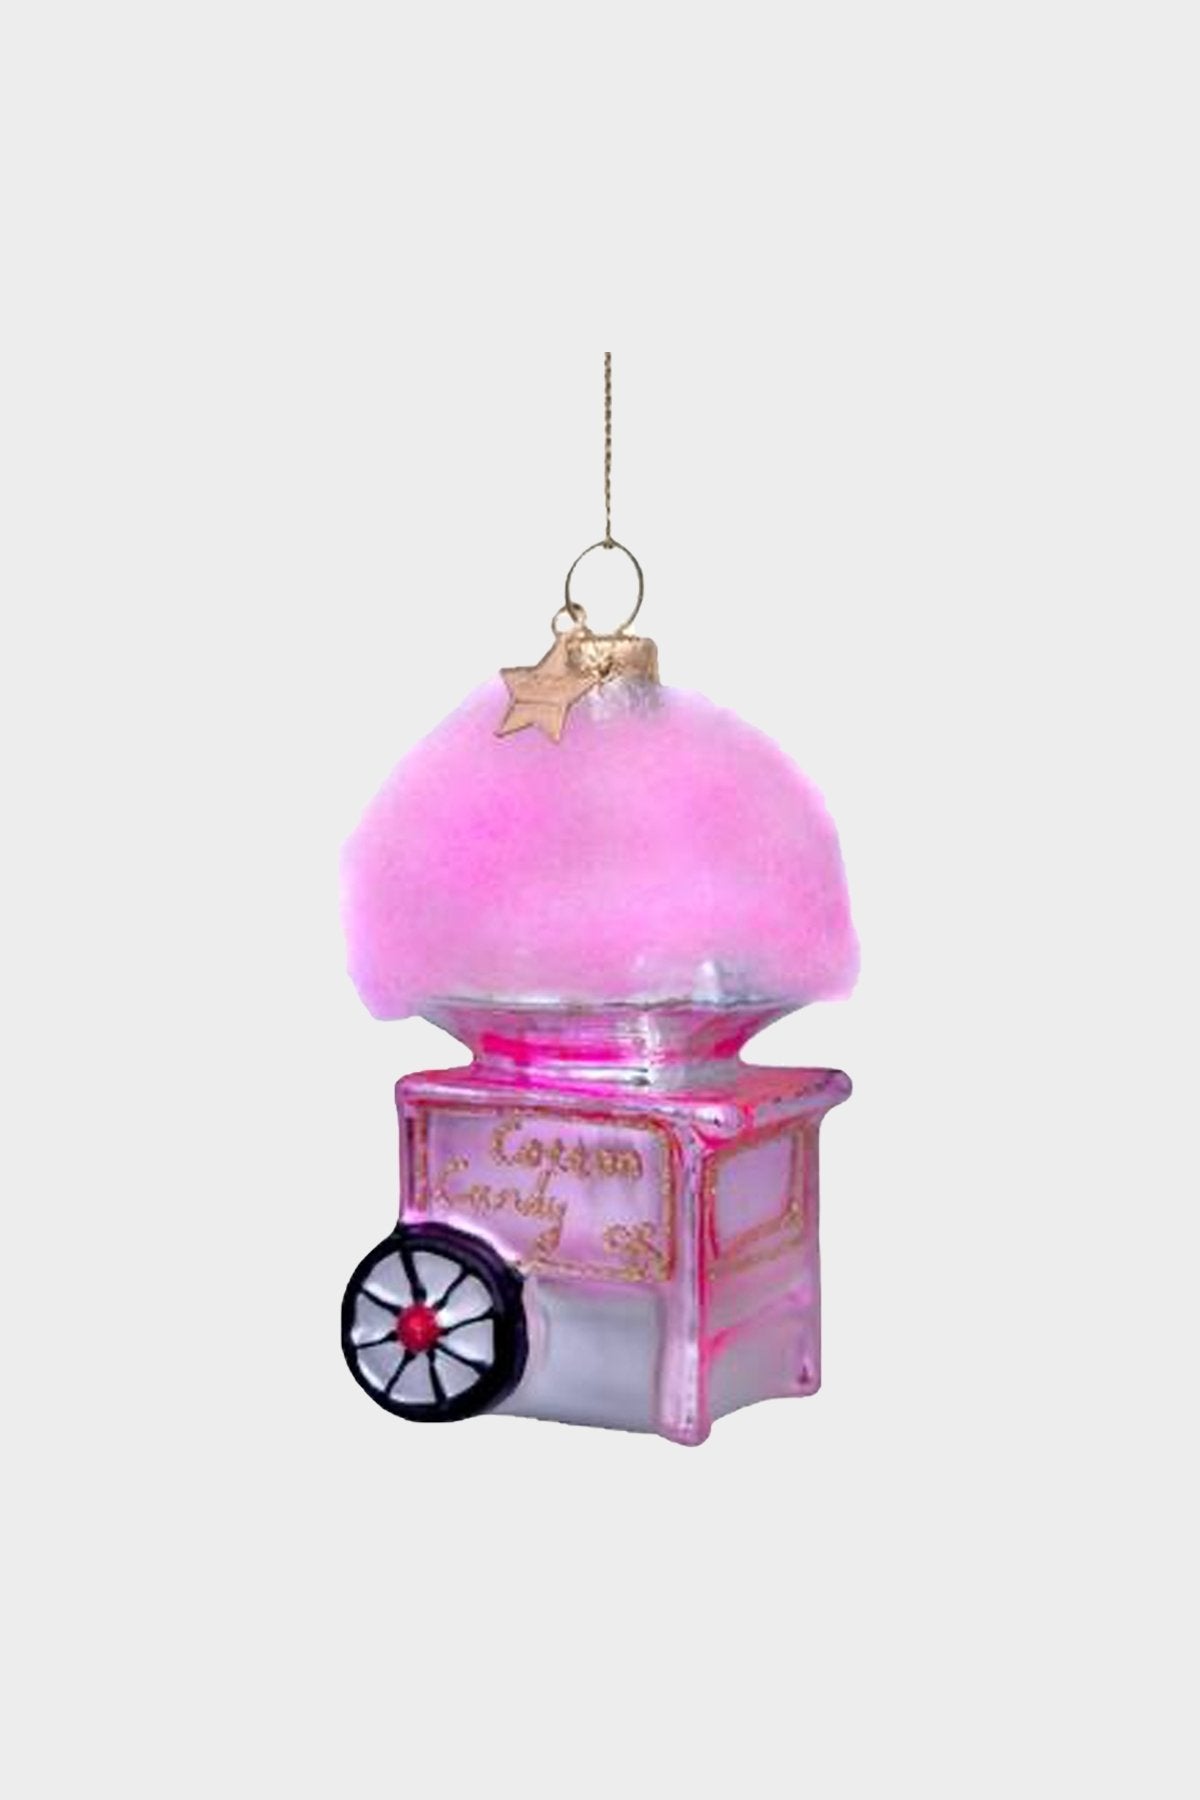 Ornament glass pink cotton candy machine H10cm - shop-olivia.com